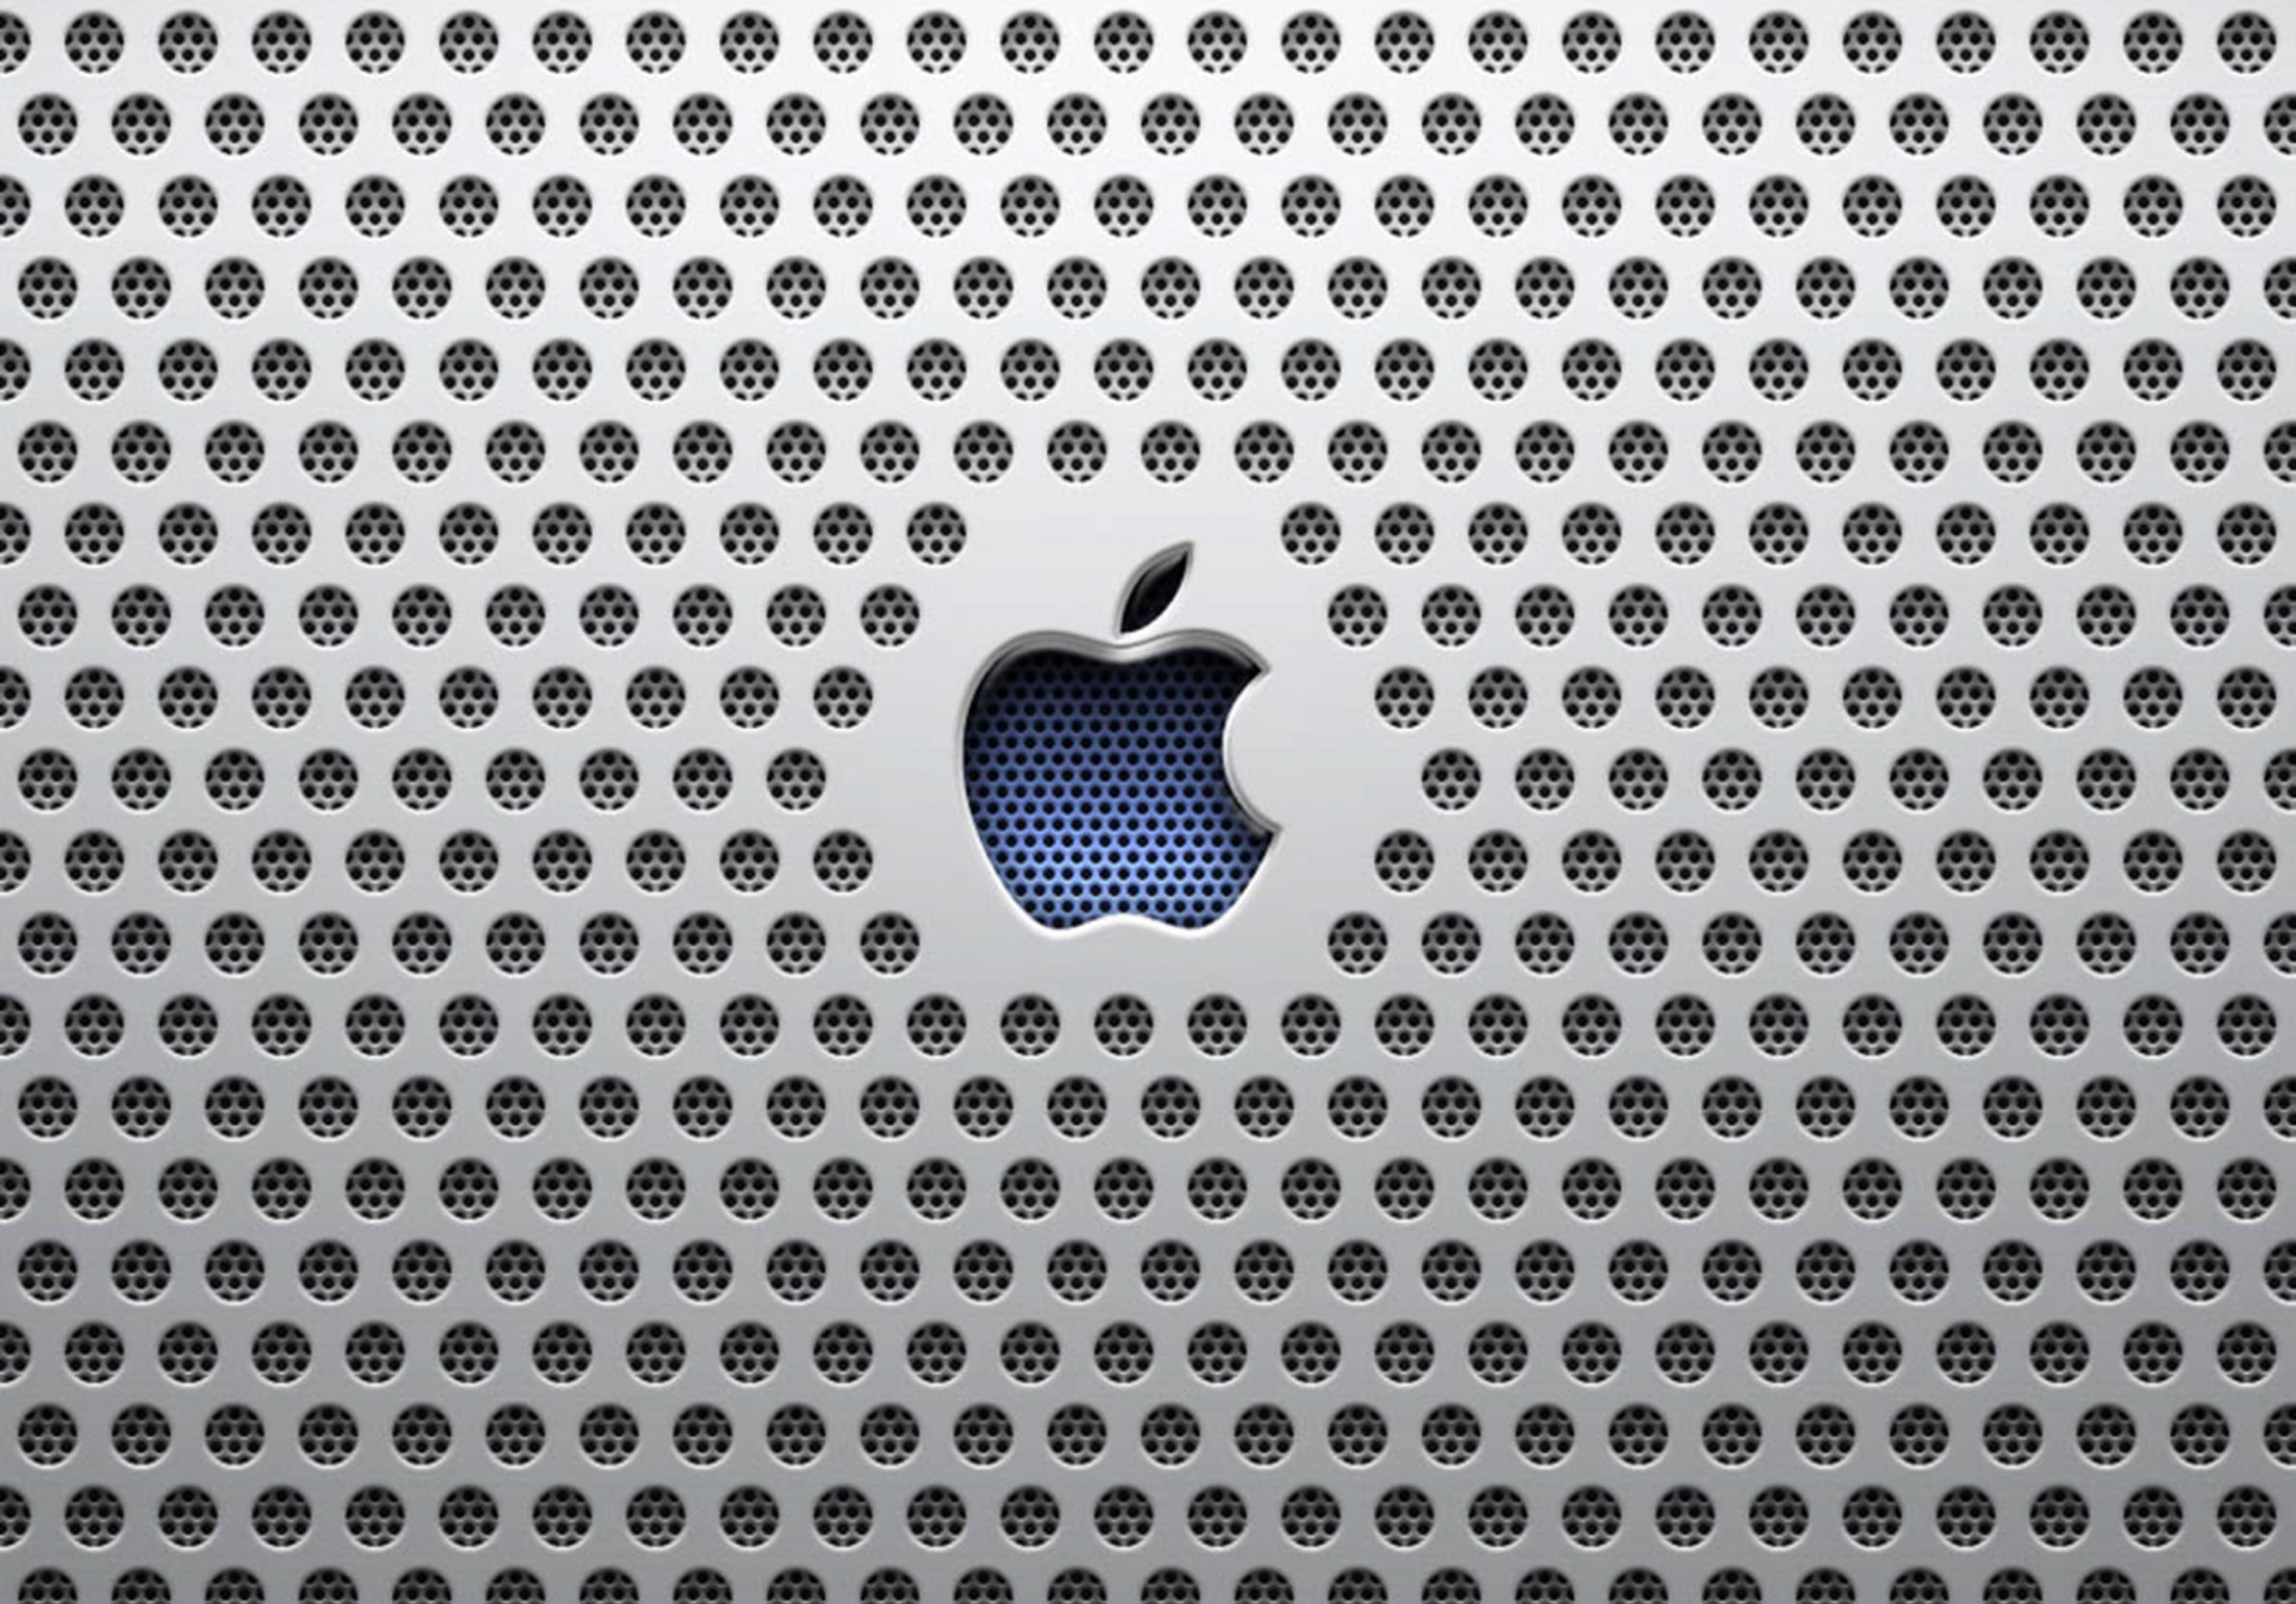 2388x1668 iPad Pro wallpapers Apple Industrial Ipad Wallpaper 2388x1668 pixels resolution